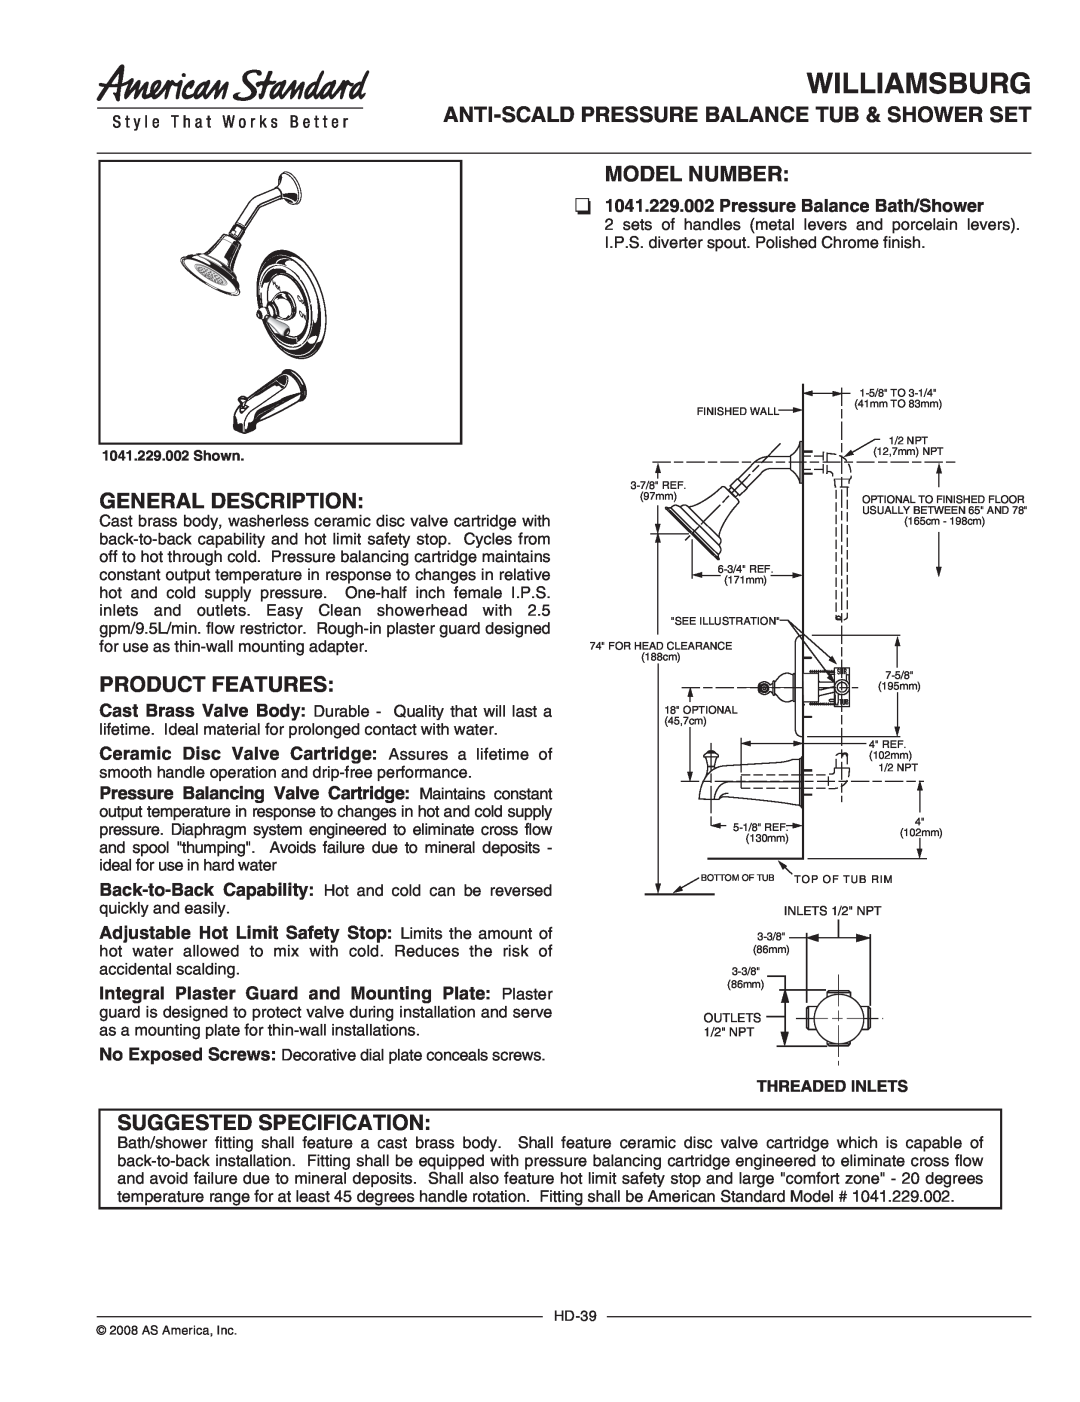 American Standard 1041.229.002 manual Williamsburg, Anti-Scald Pressure Balance Tub & Shower Set, Model Number 